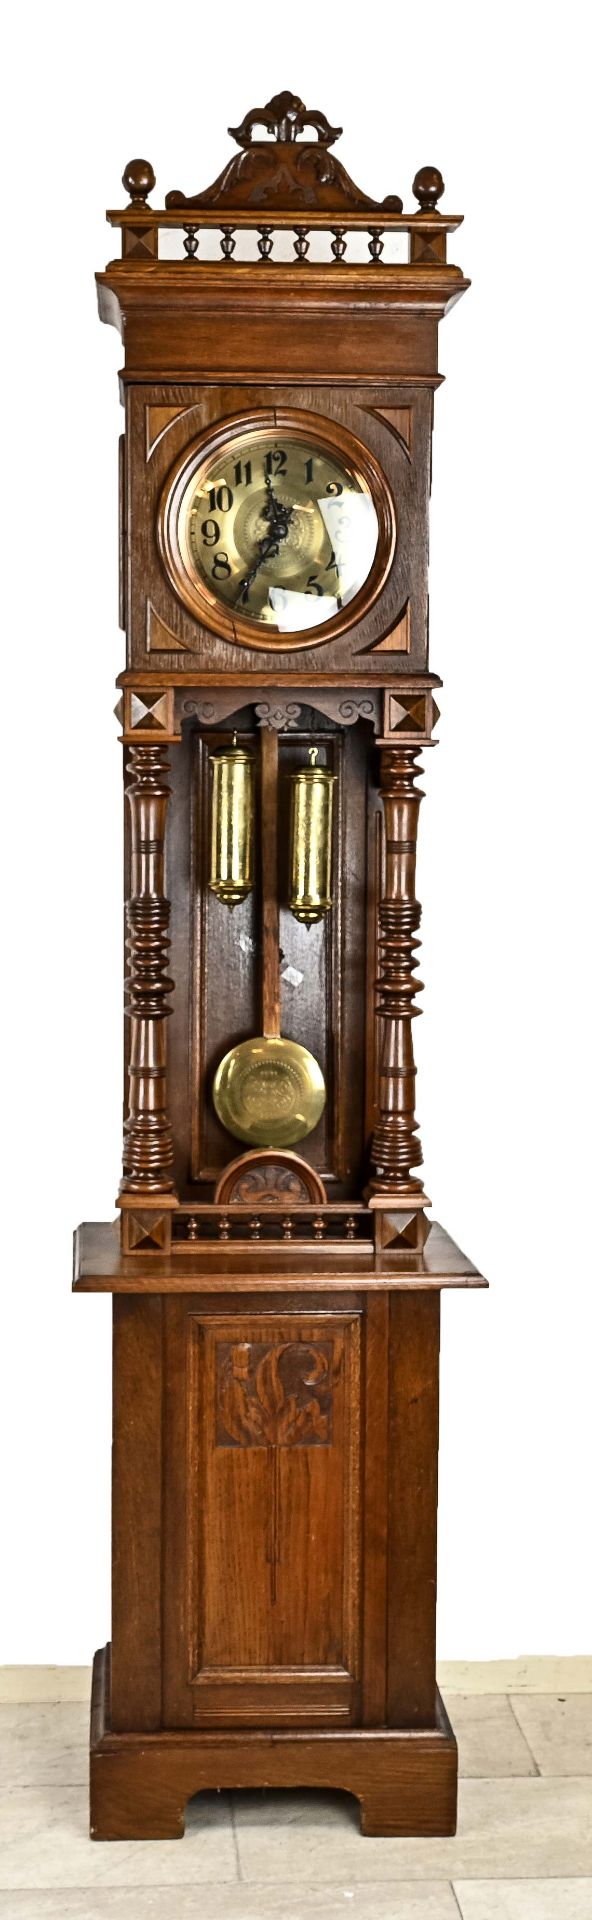 Antique Gustav Becker grandfather clock, 1890